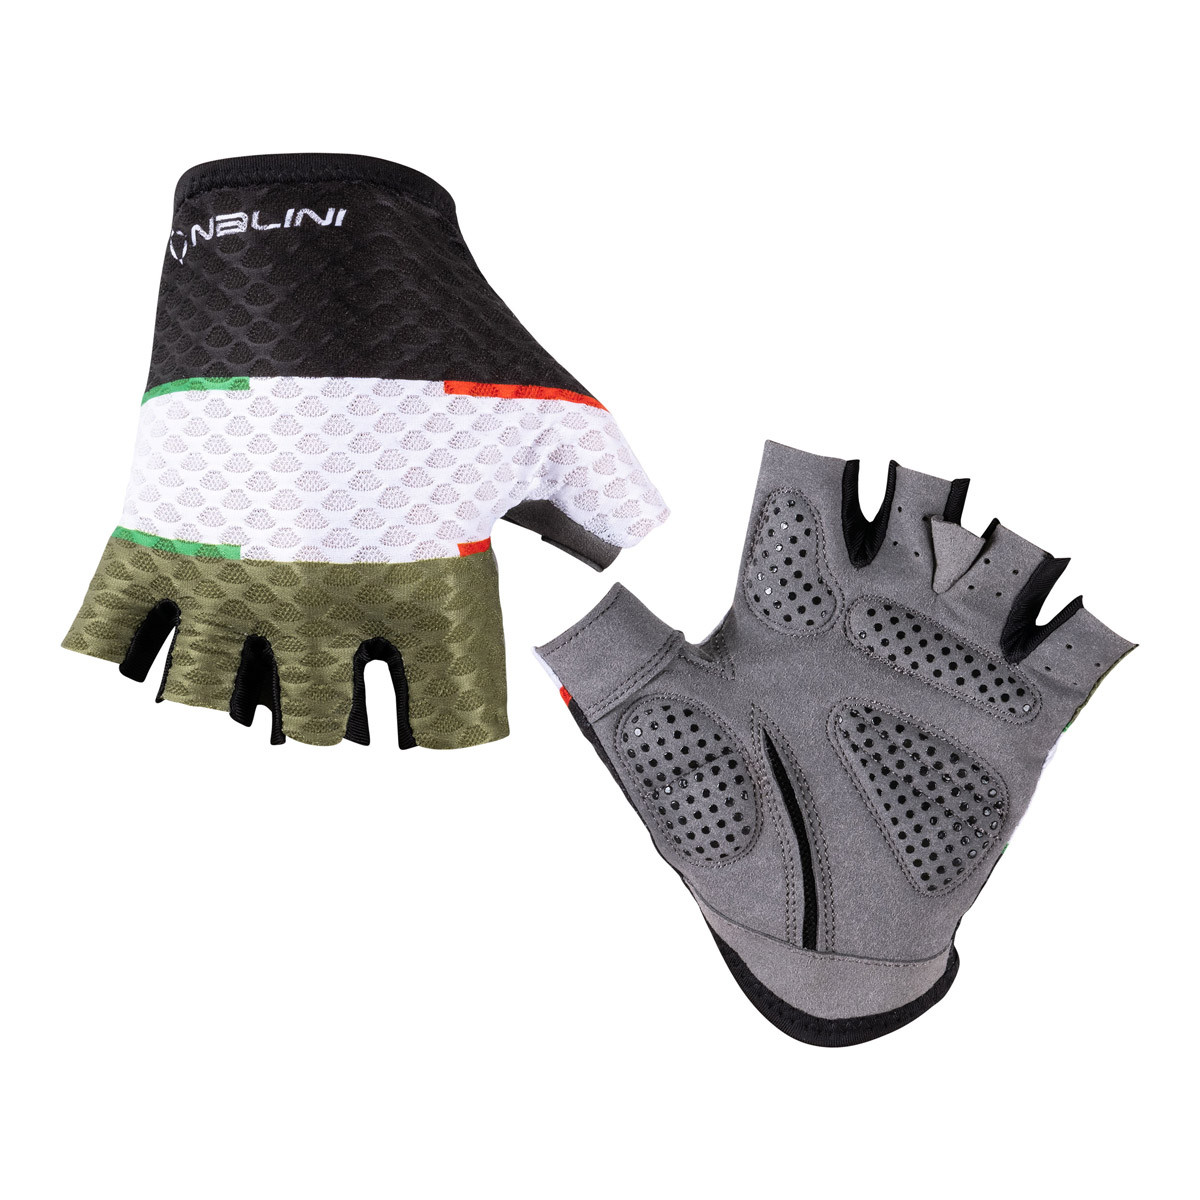 Nalini Summer Olive Green Black 4400 Gloves